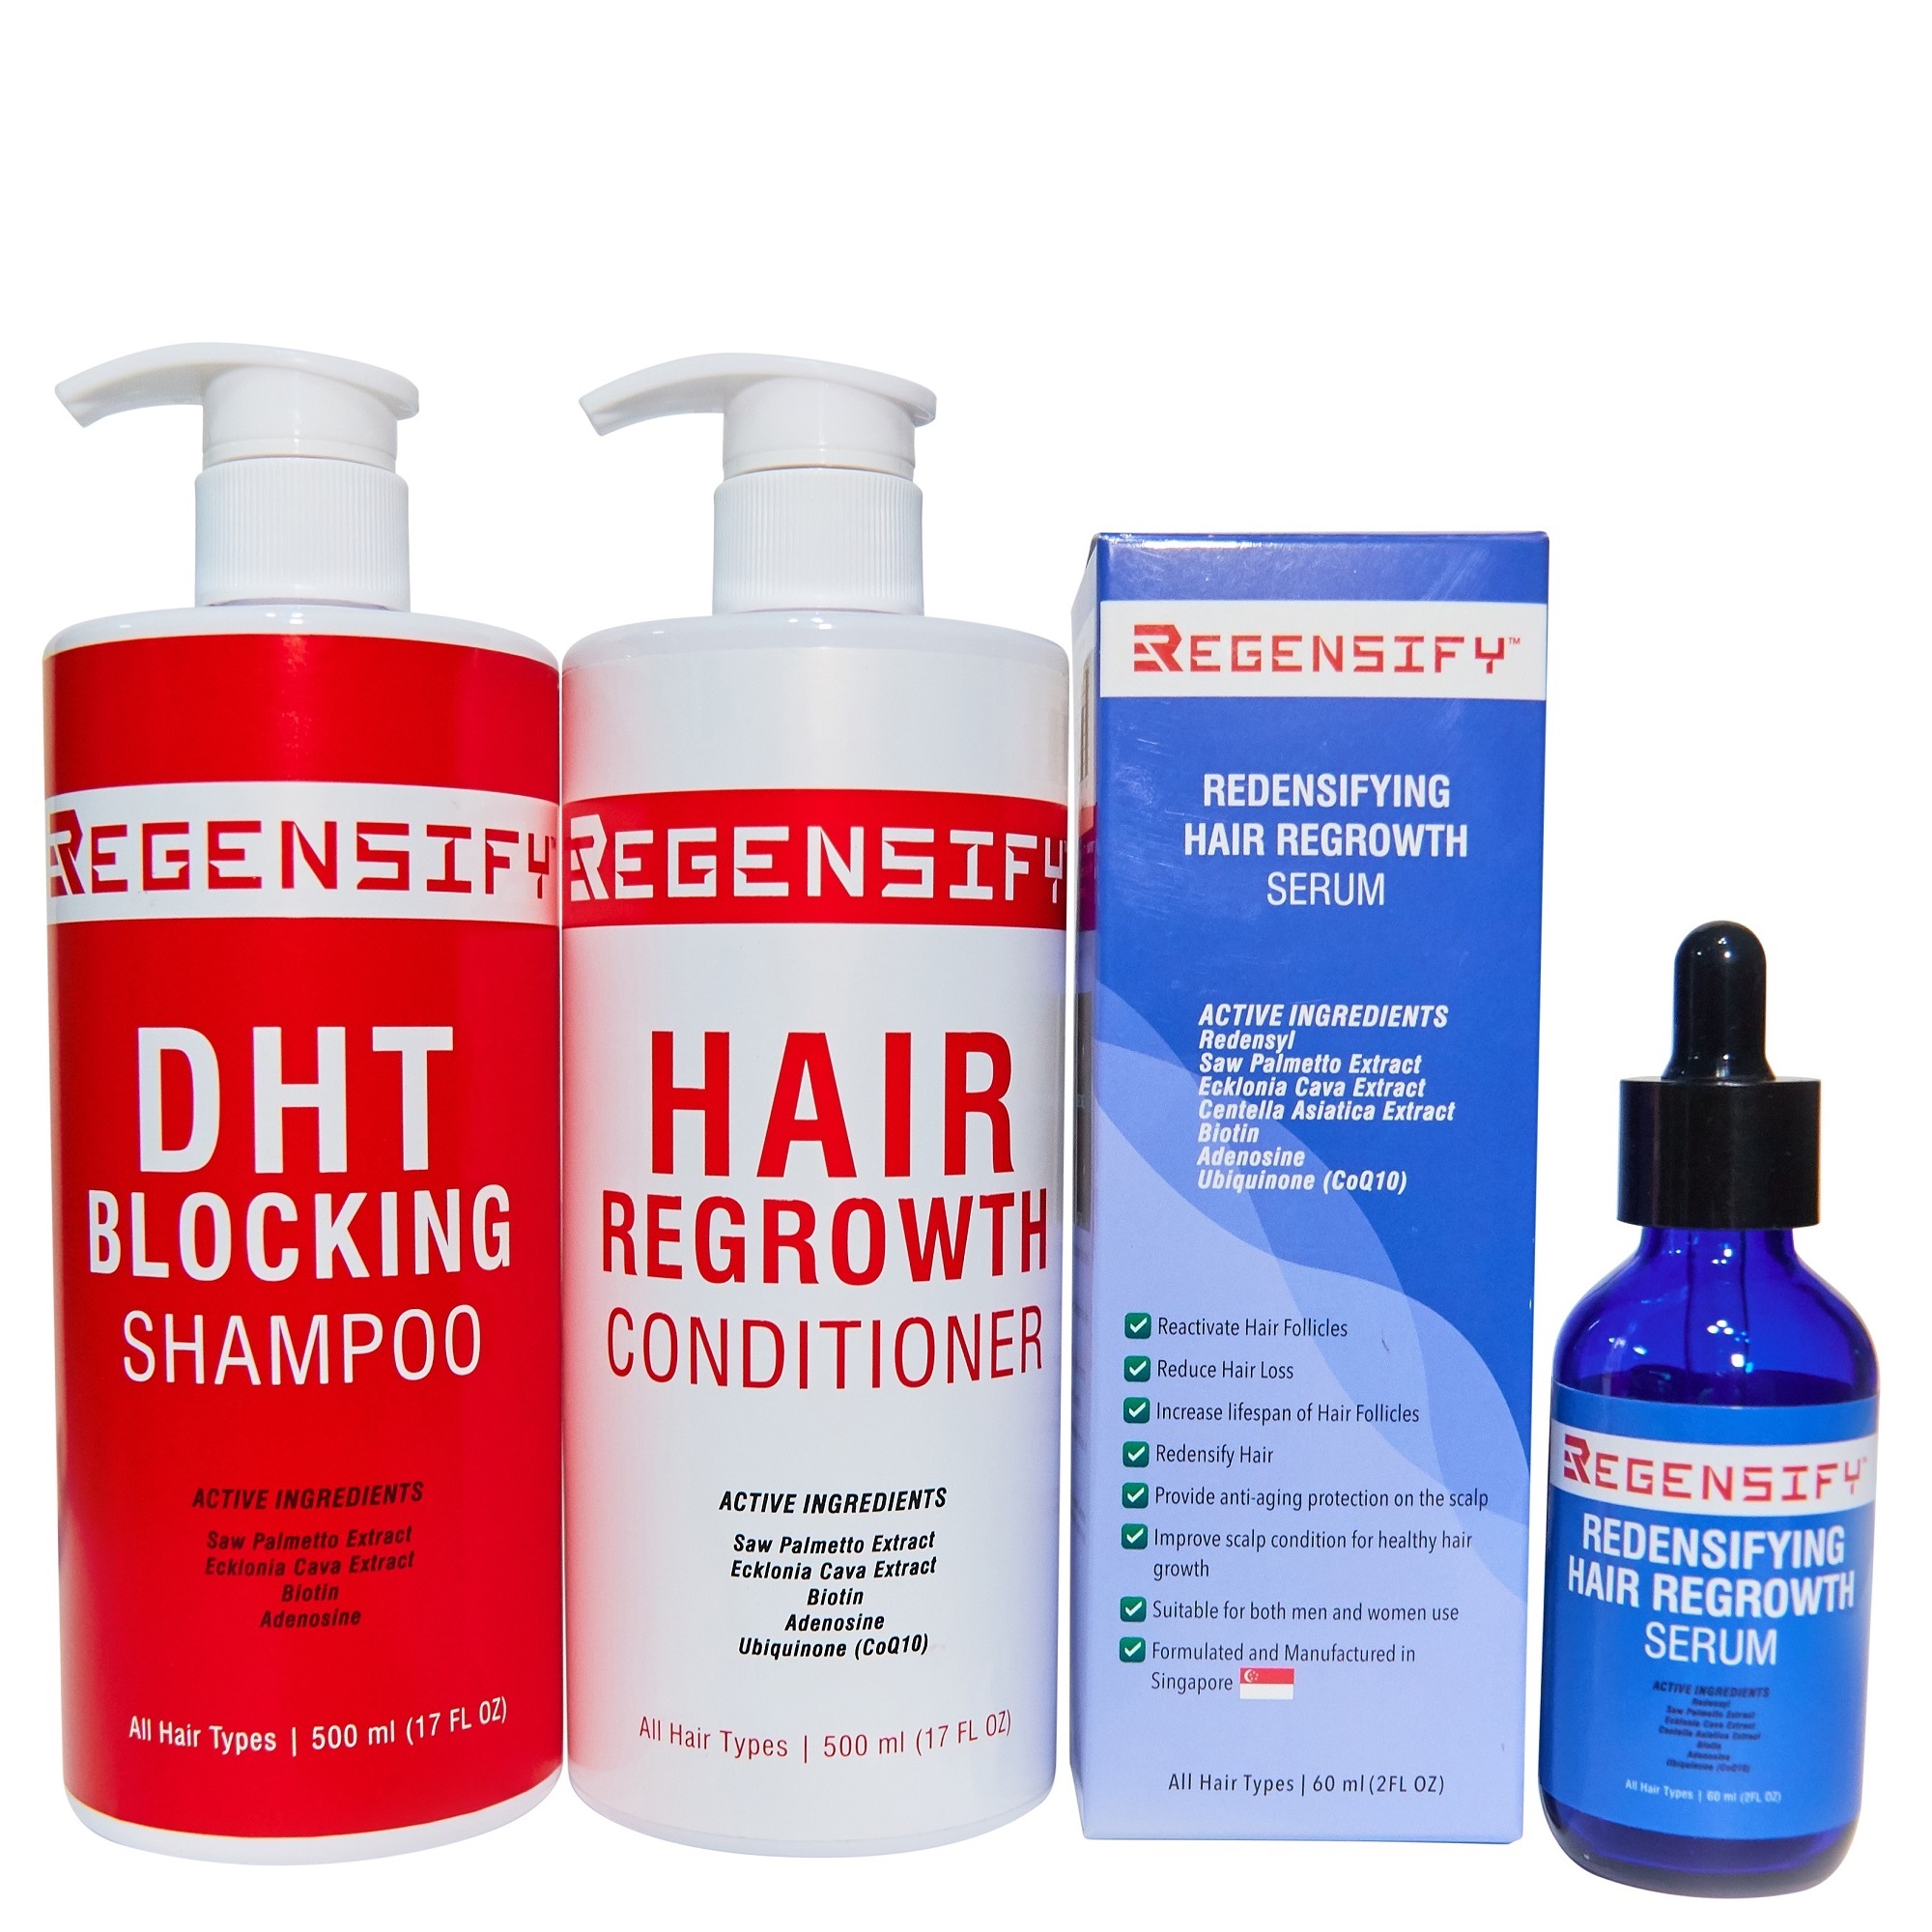 REGENSIFY DHT Blocking Shampoo 500 ml + Hair Regrowth Conditioner 500 ml +  Redensifying Hair Regrowth Serum 60 ml [Full Professional Bundle Set]  Review & Price 2020 | Insider Mall Singapore